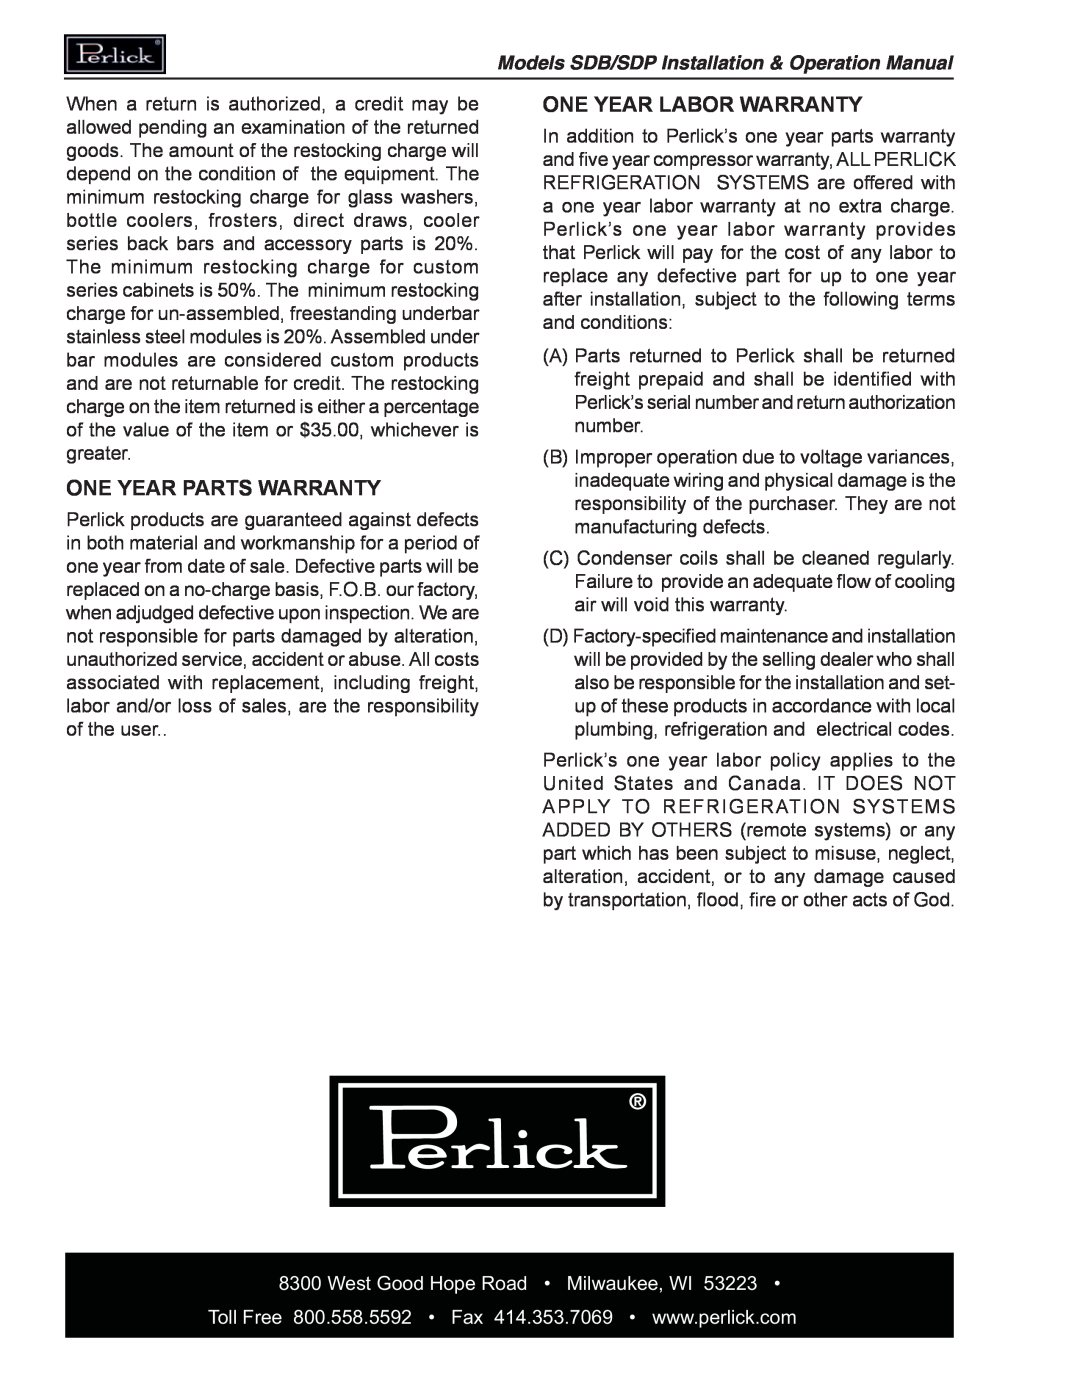 Perlick SDBR48 operation manual One Year Parts Warranty, One Year Labor Warranty 